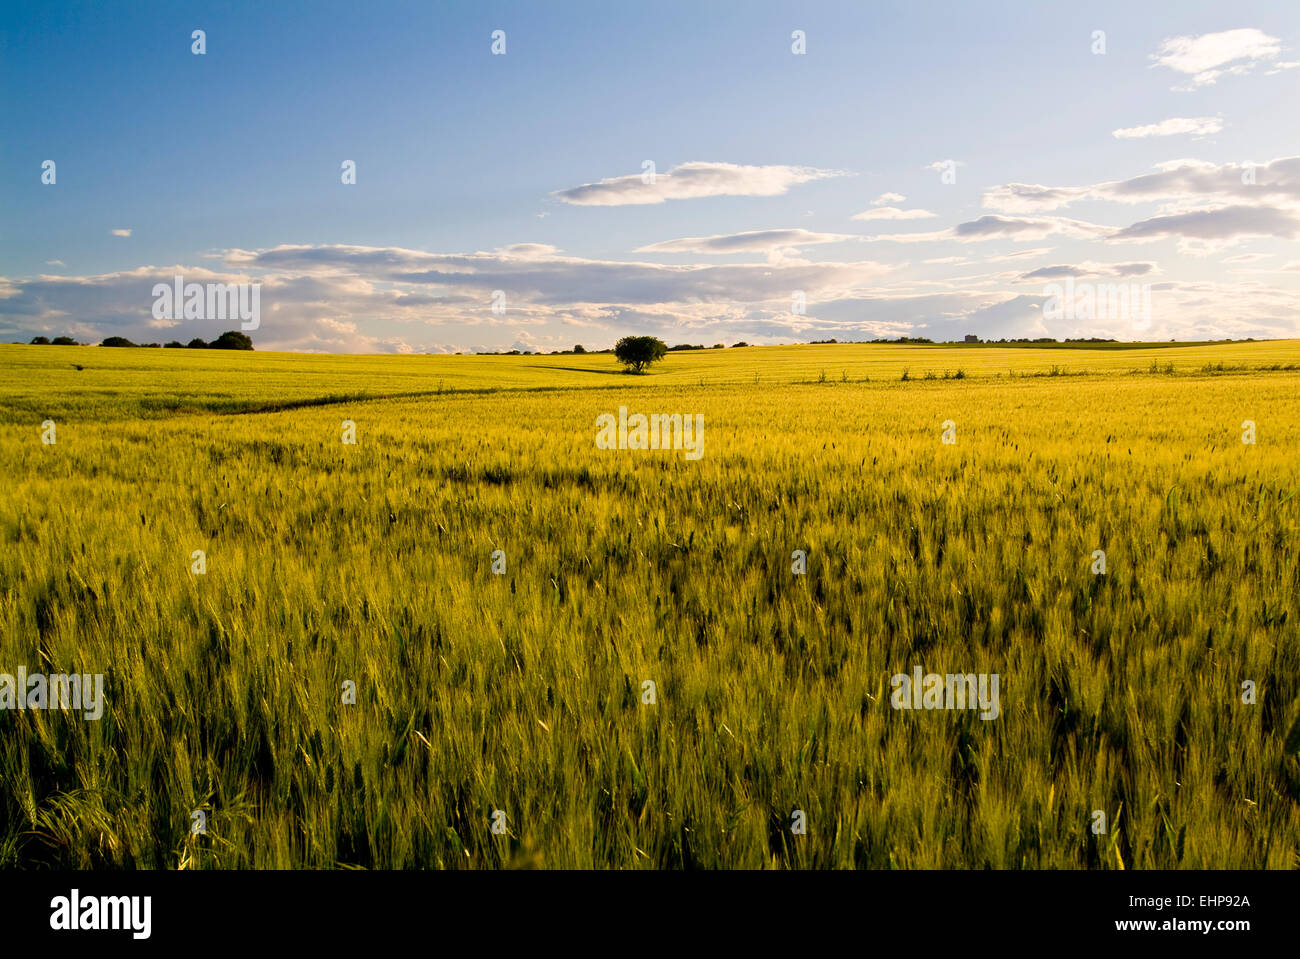 Tavoliere, Apulia, Italy, wheat fields Stock Photo